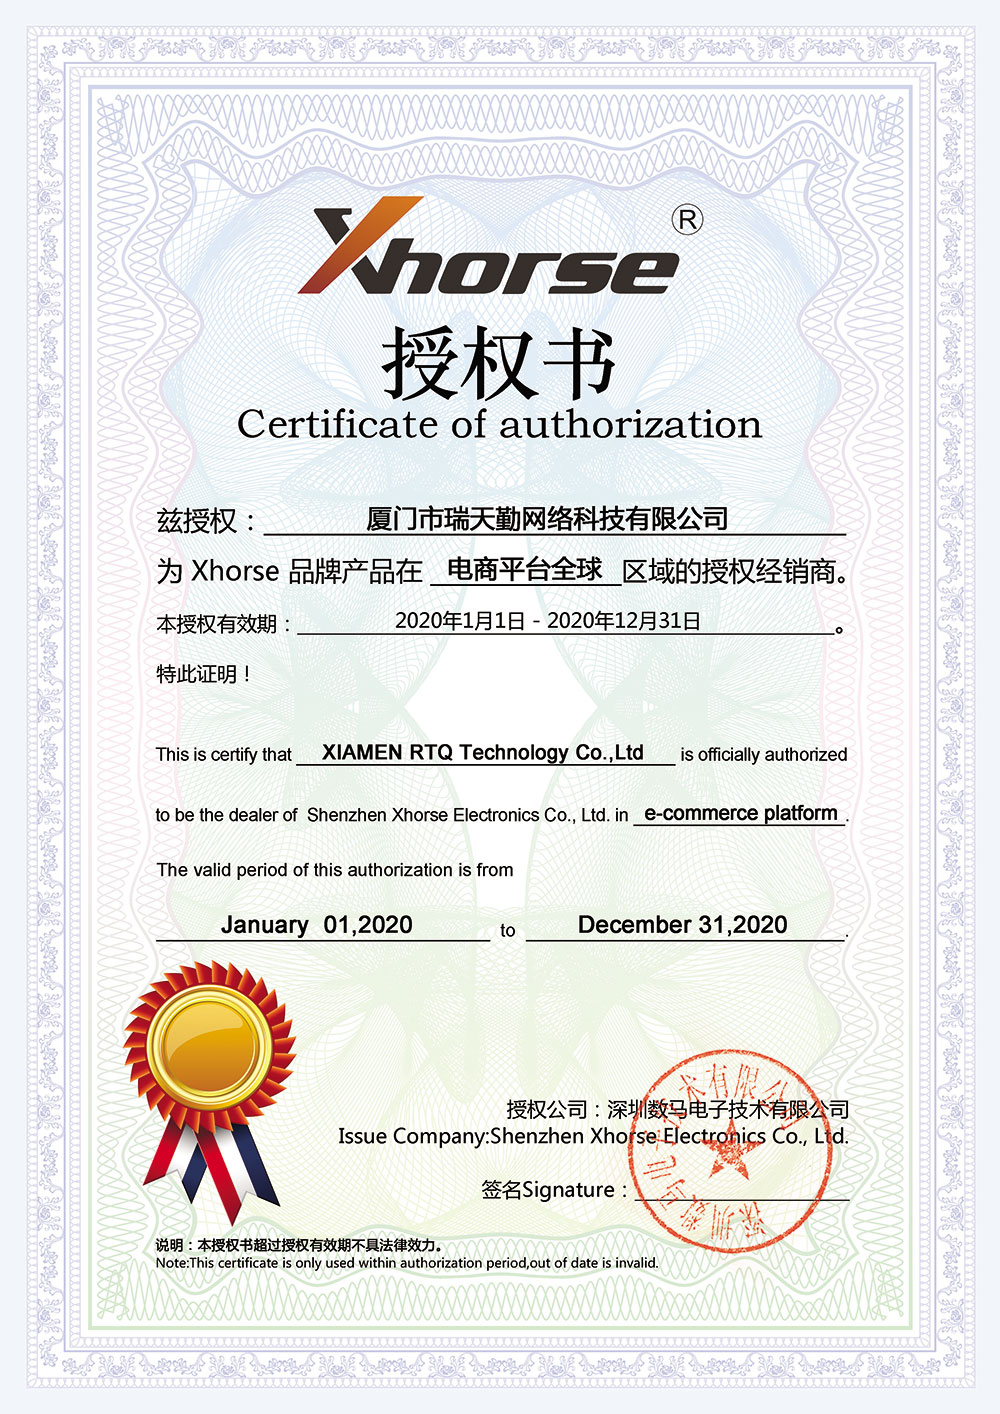 XHORSE authorization certificate